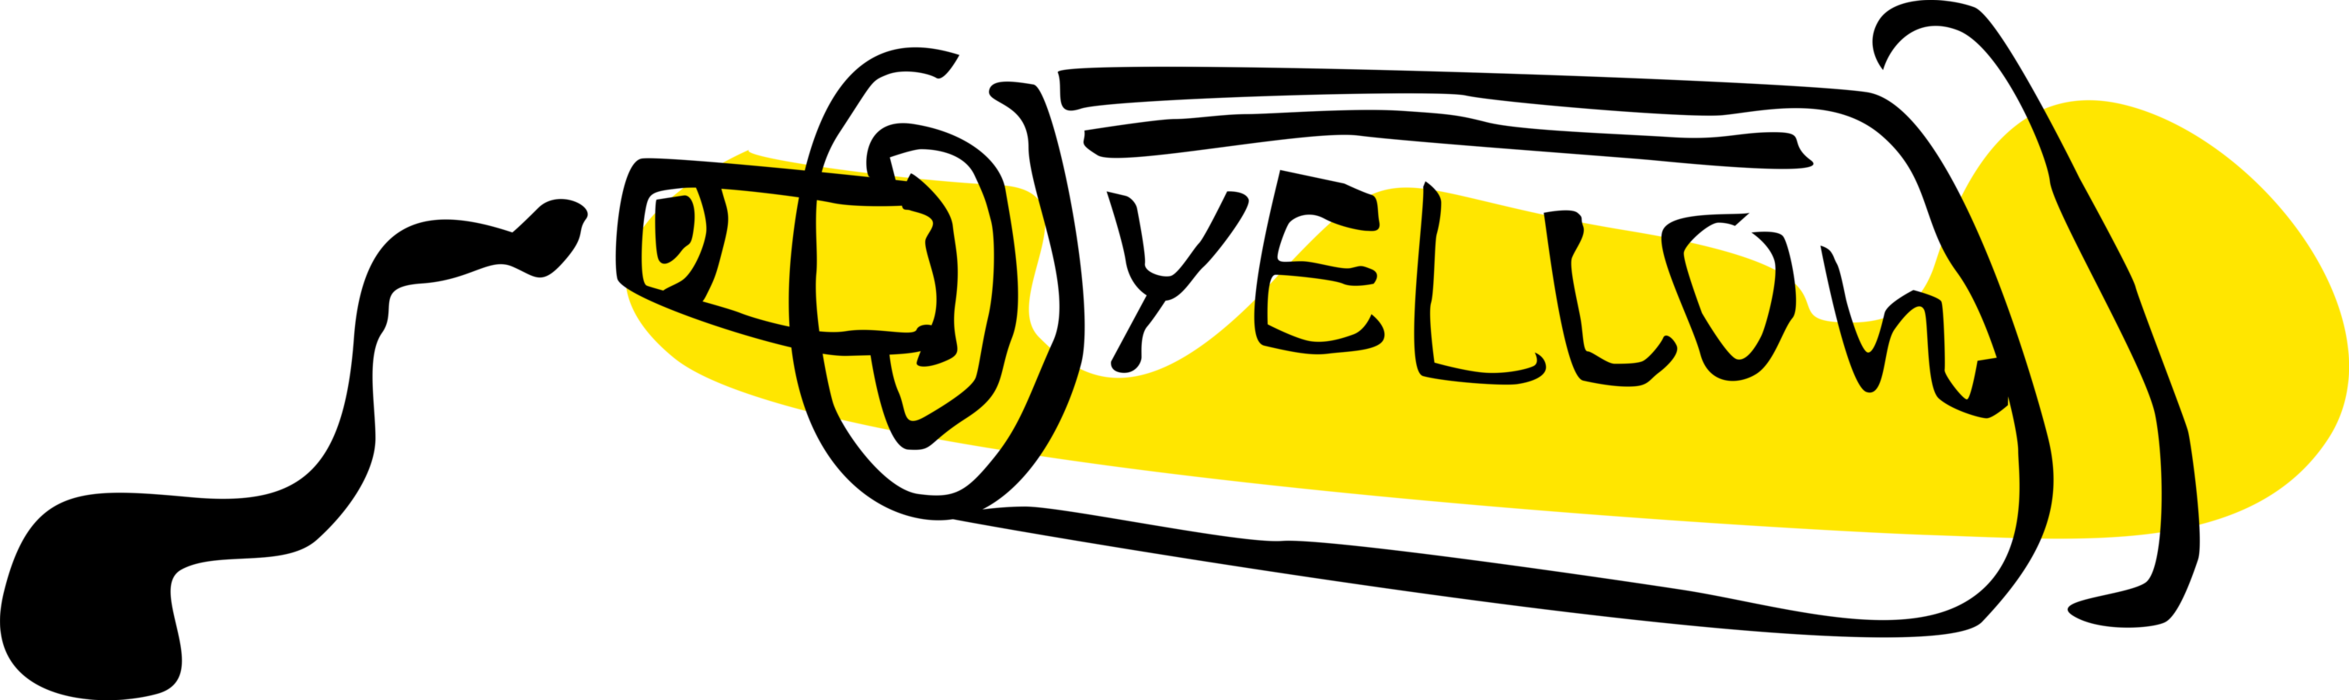 Vector Illustration of Visual Arts Artist's Yellow Paint Tube